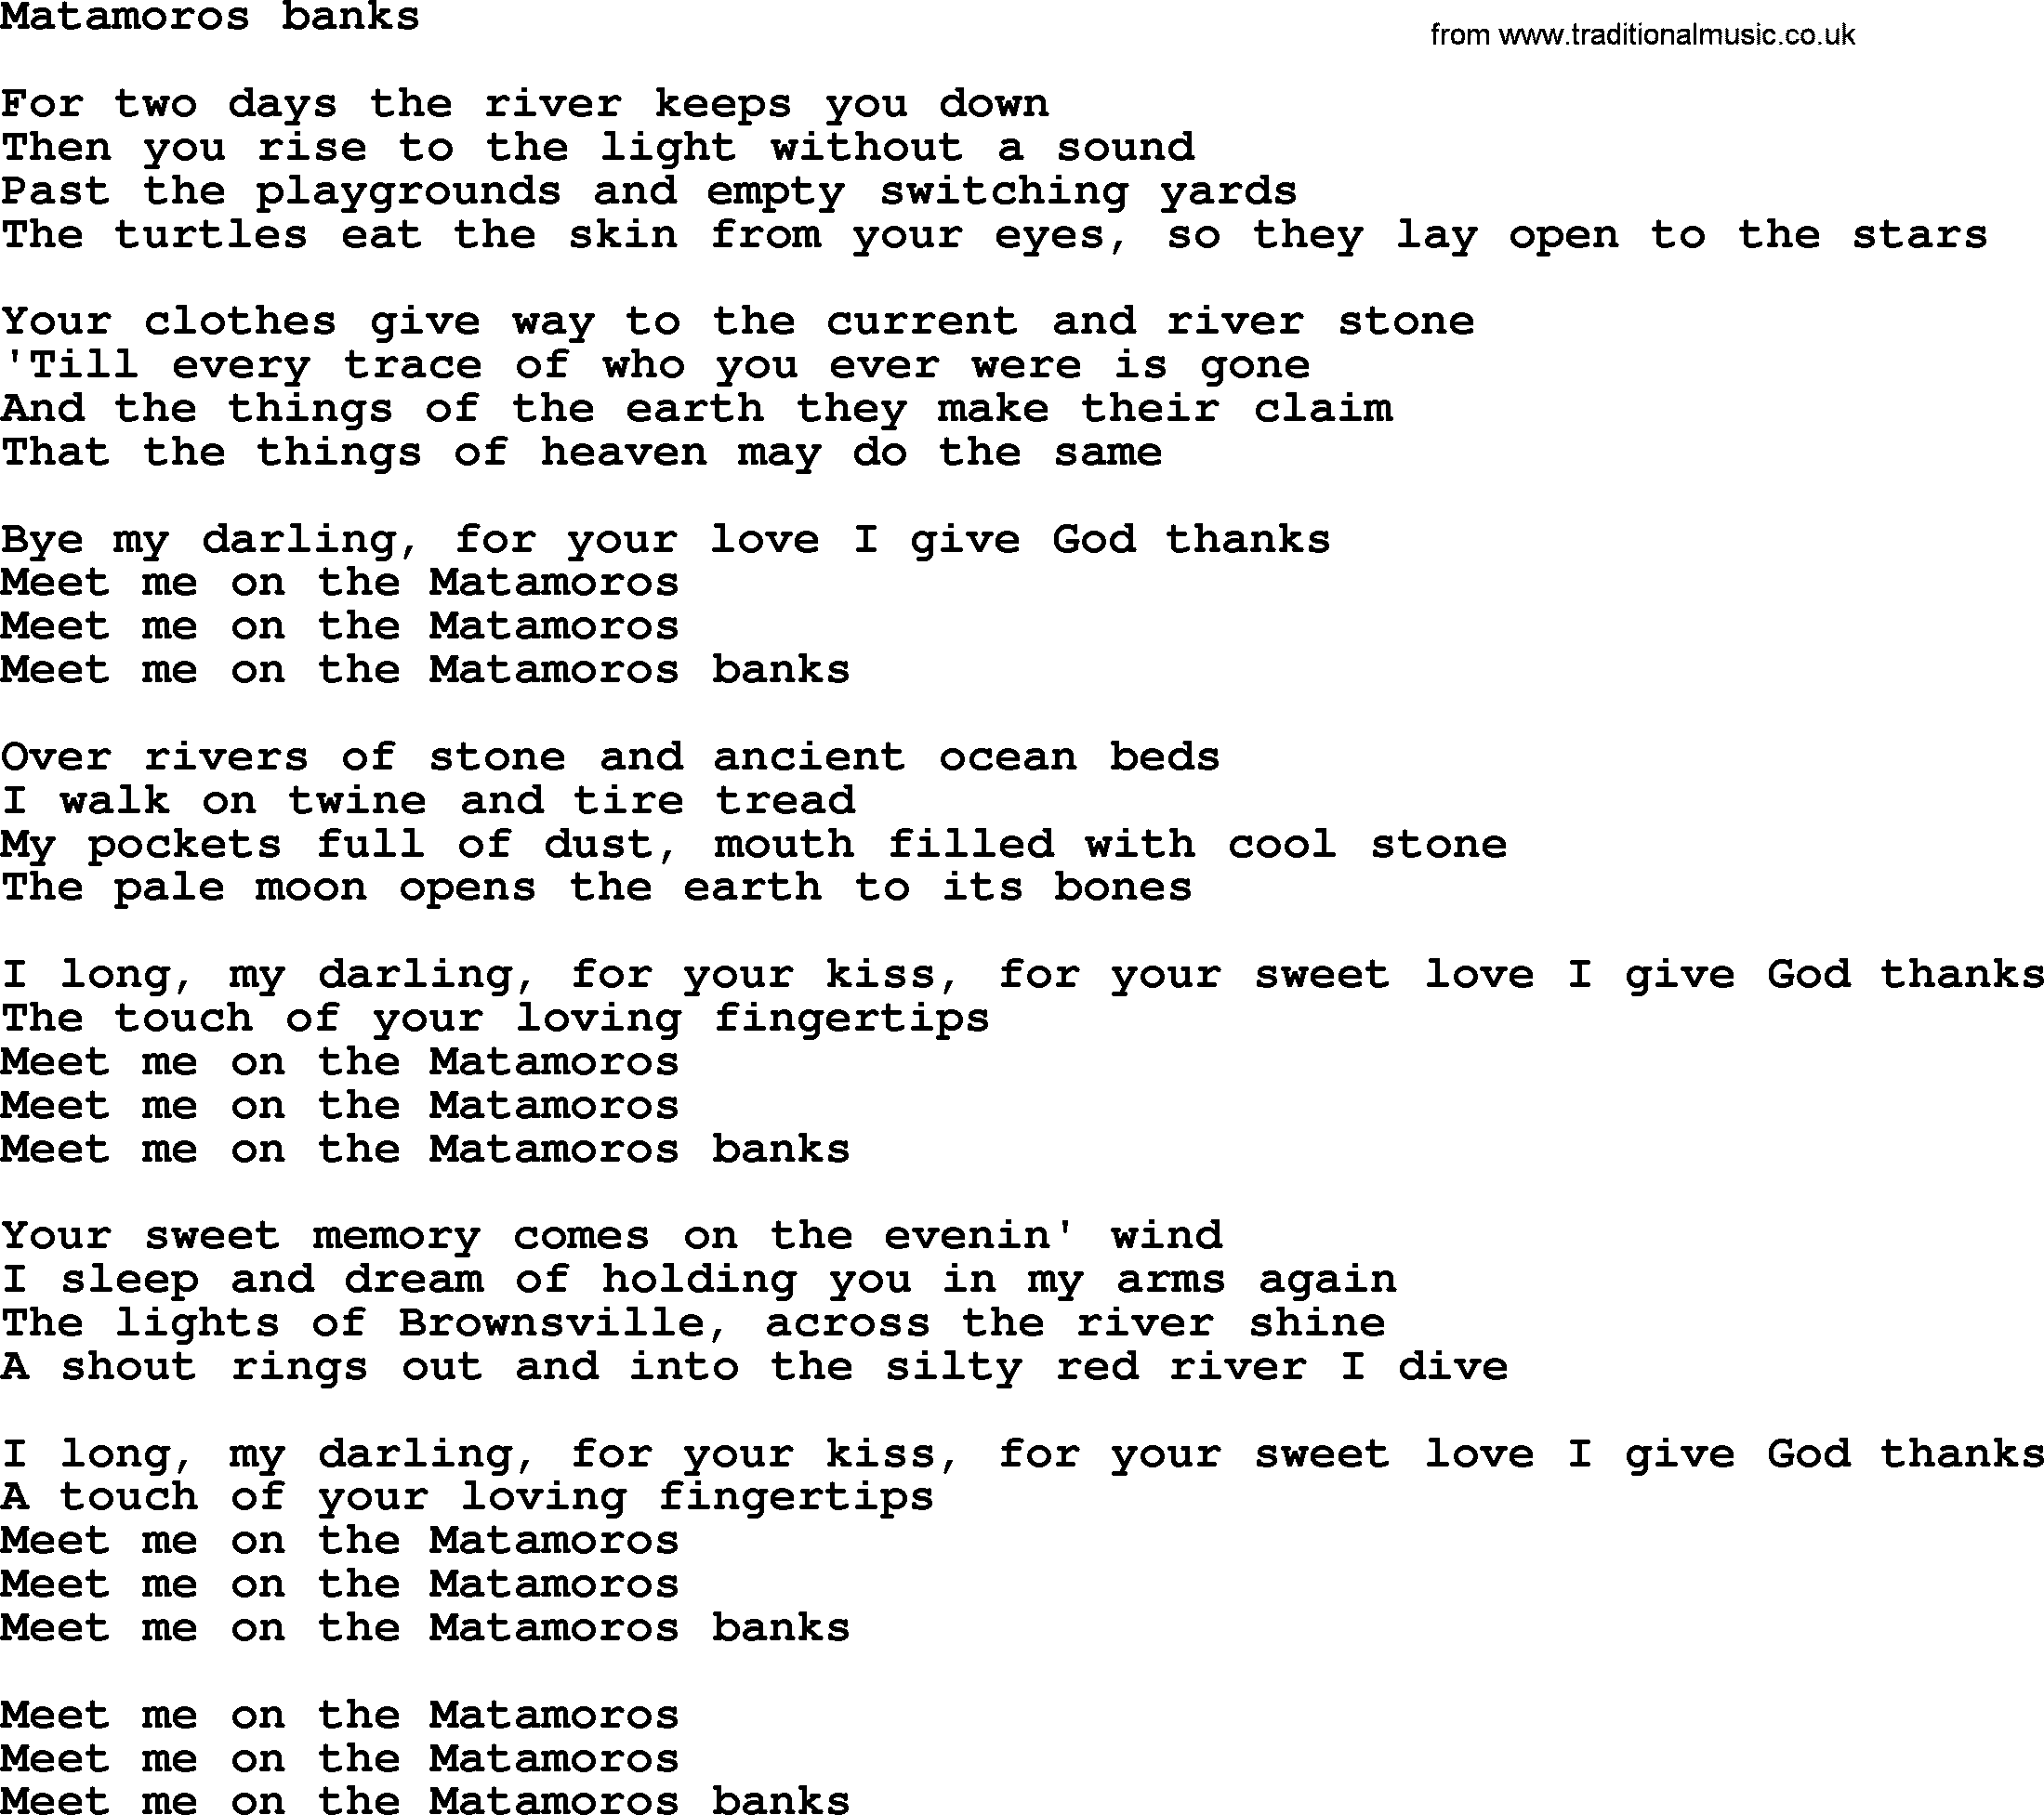 Bruce Springsteen song: Matamoros Banks lyrics